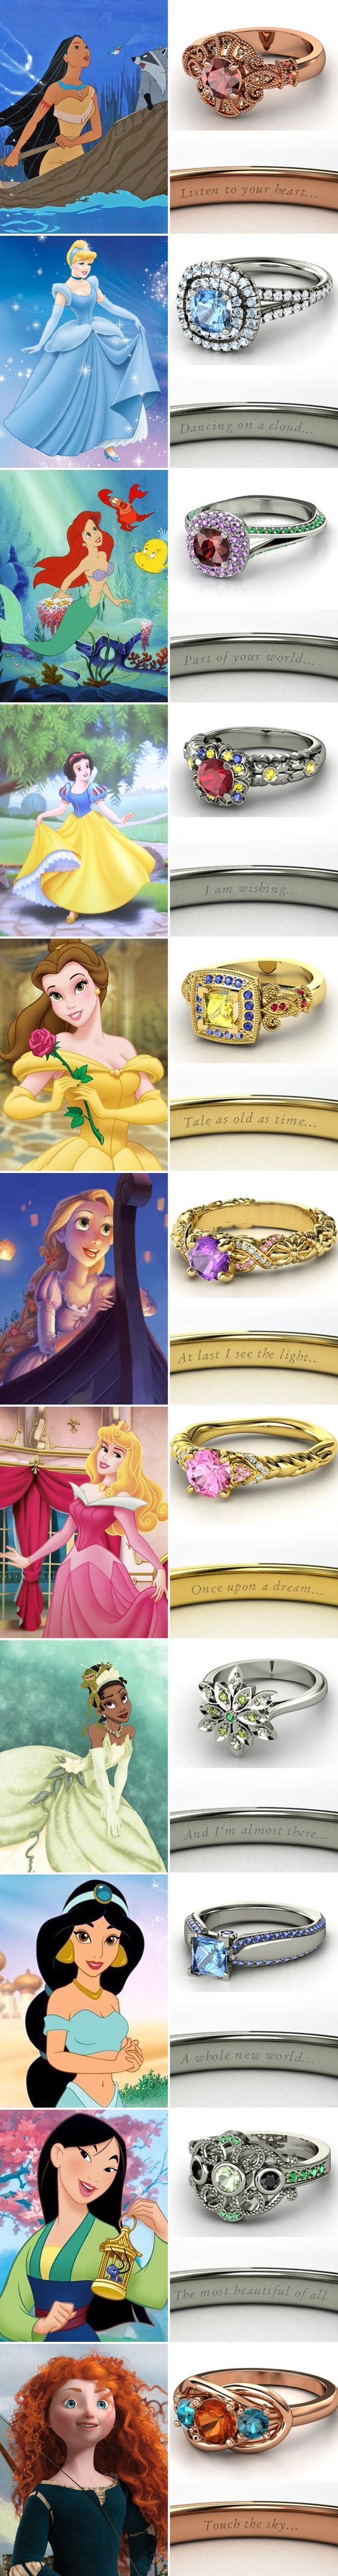 Disney princess wedding rings and more ideas for diehard #DisneyPrincess fans! I want them all!!!